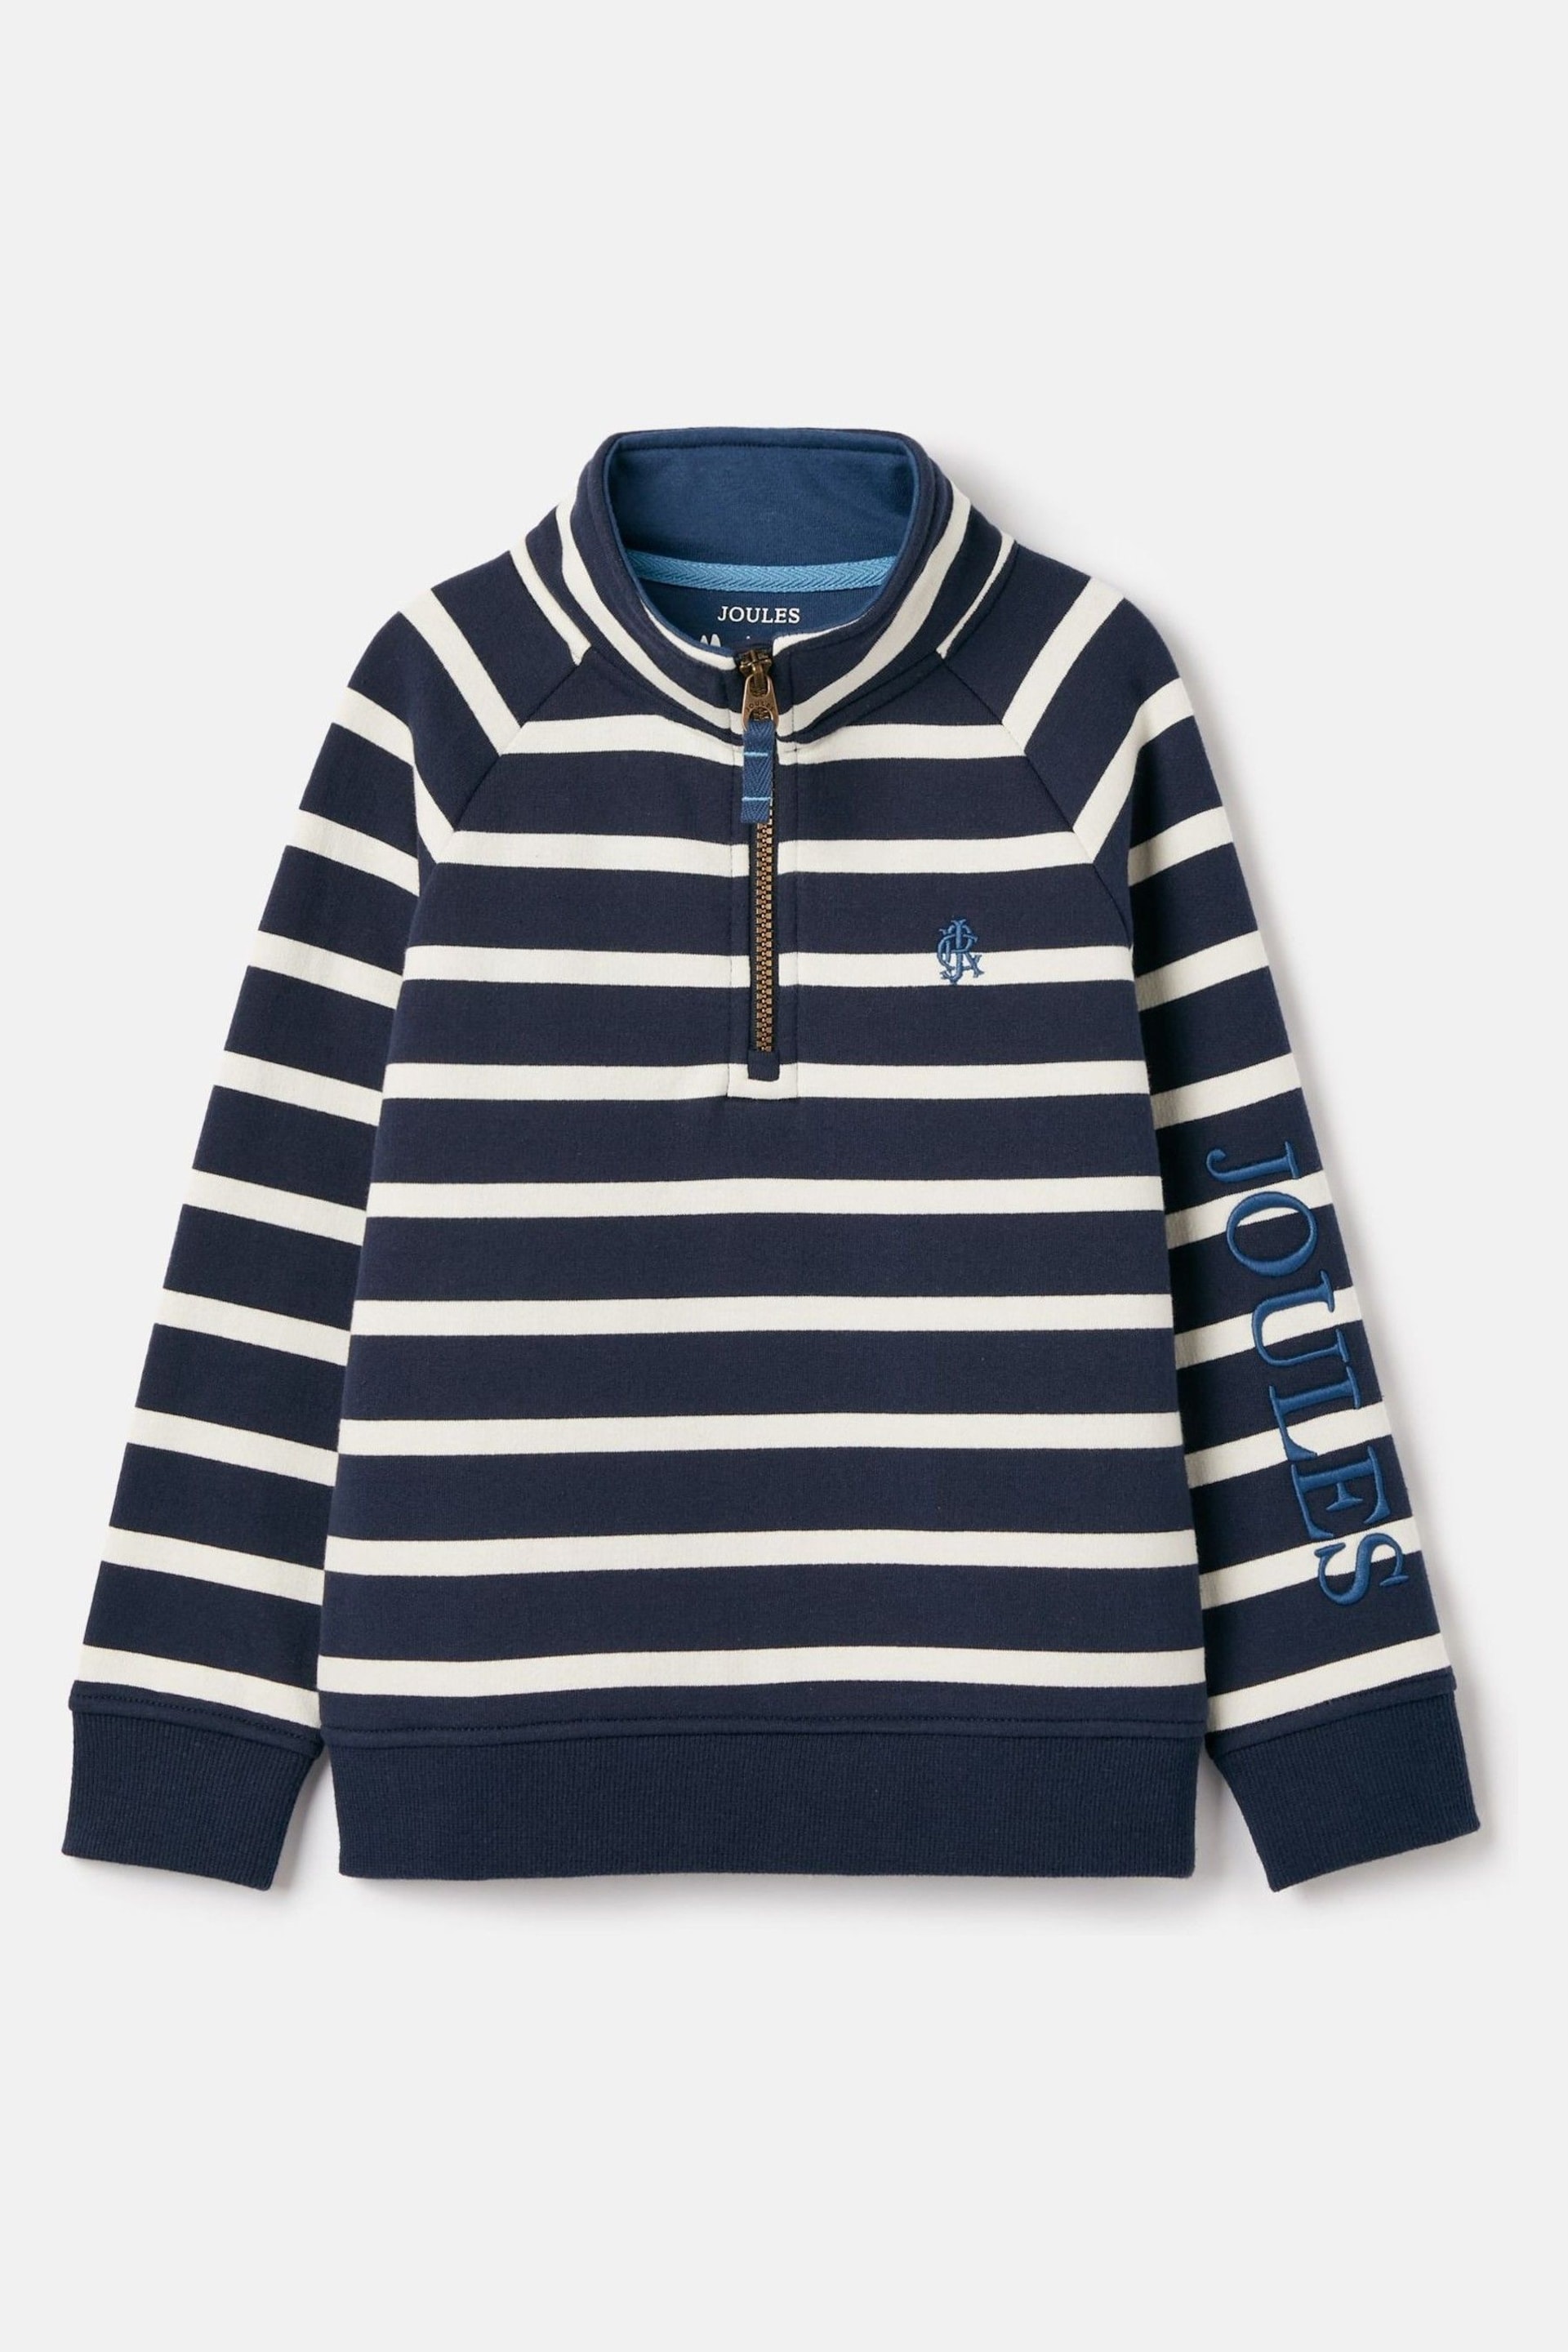 Joules Finn Navy & White Striped Quarter Zip Sweatshirt - Image 6 of 11